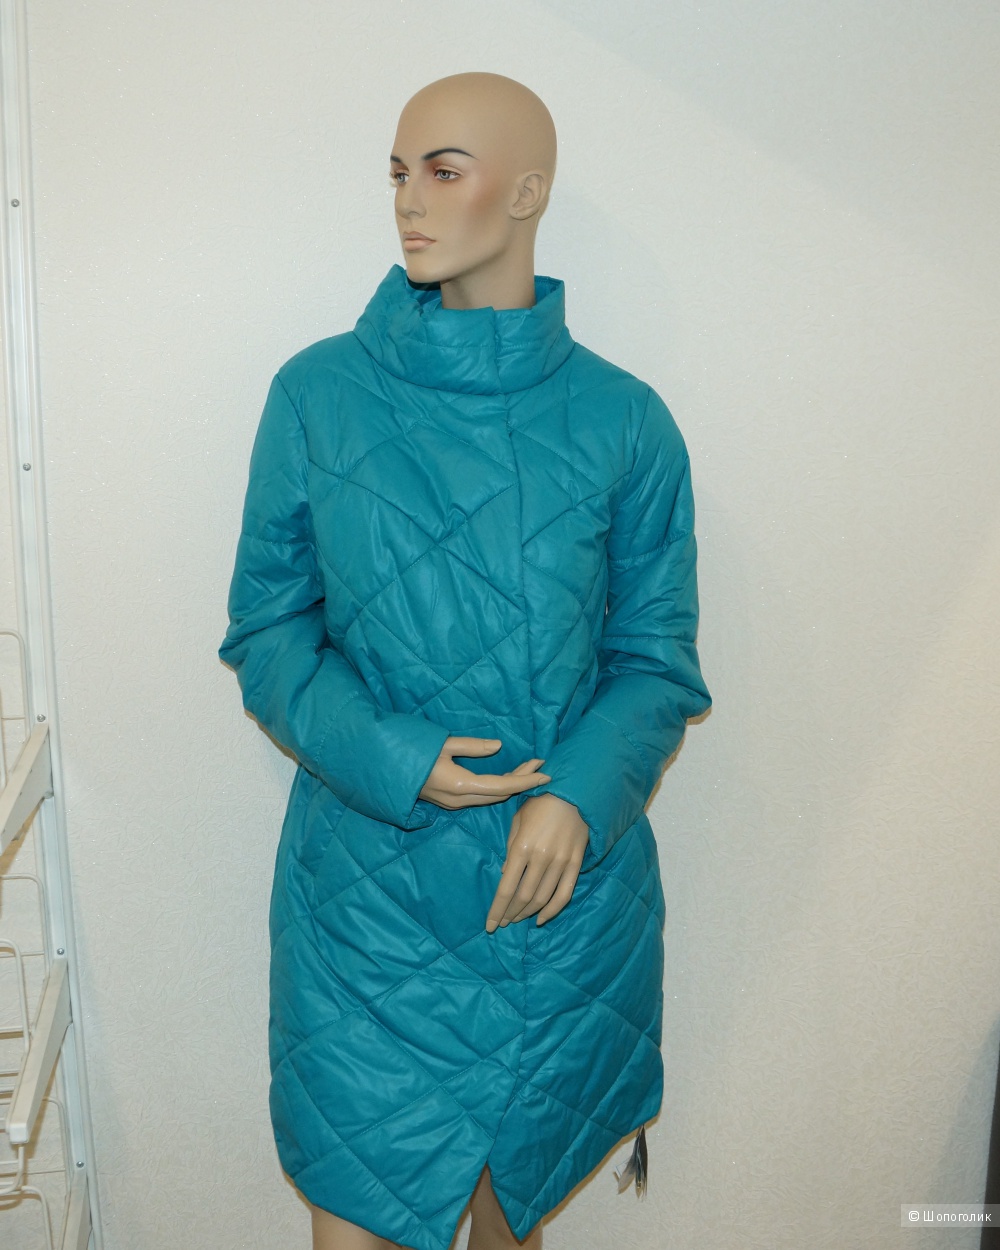 Пальто беларусского производителя TwinTip, размер 48